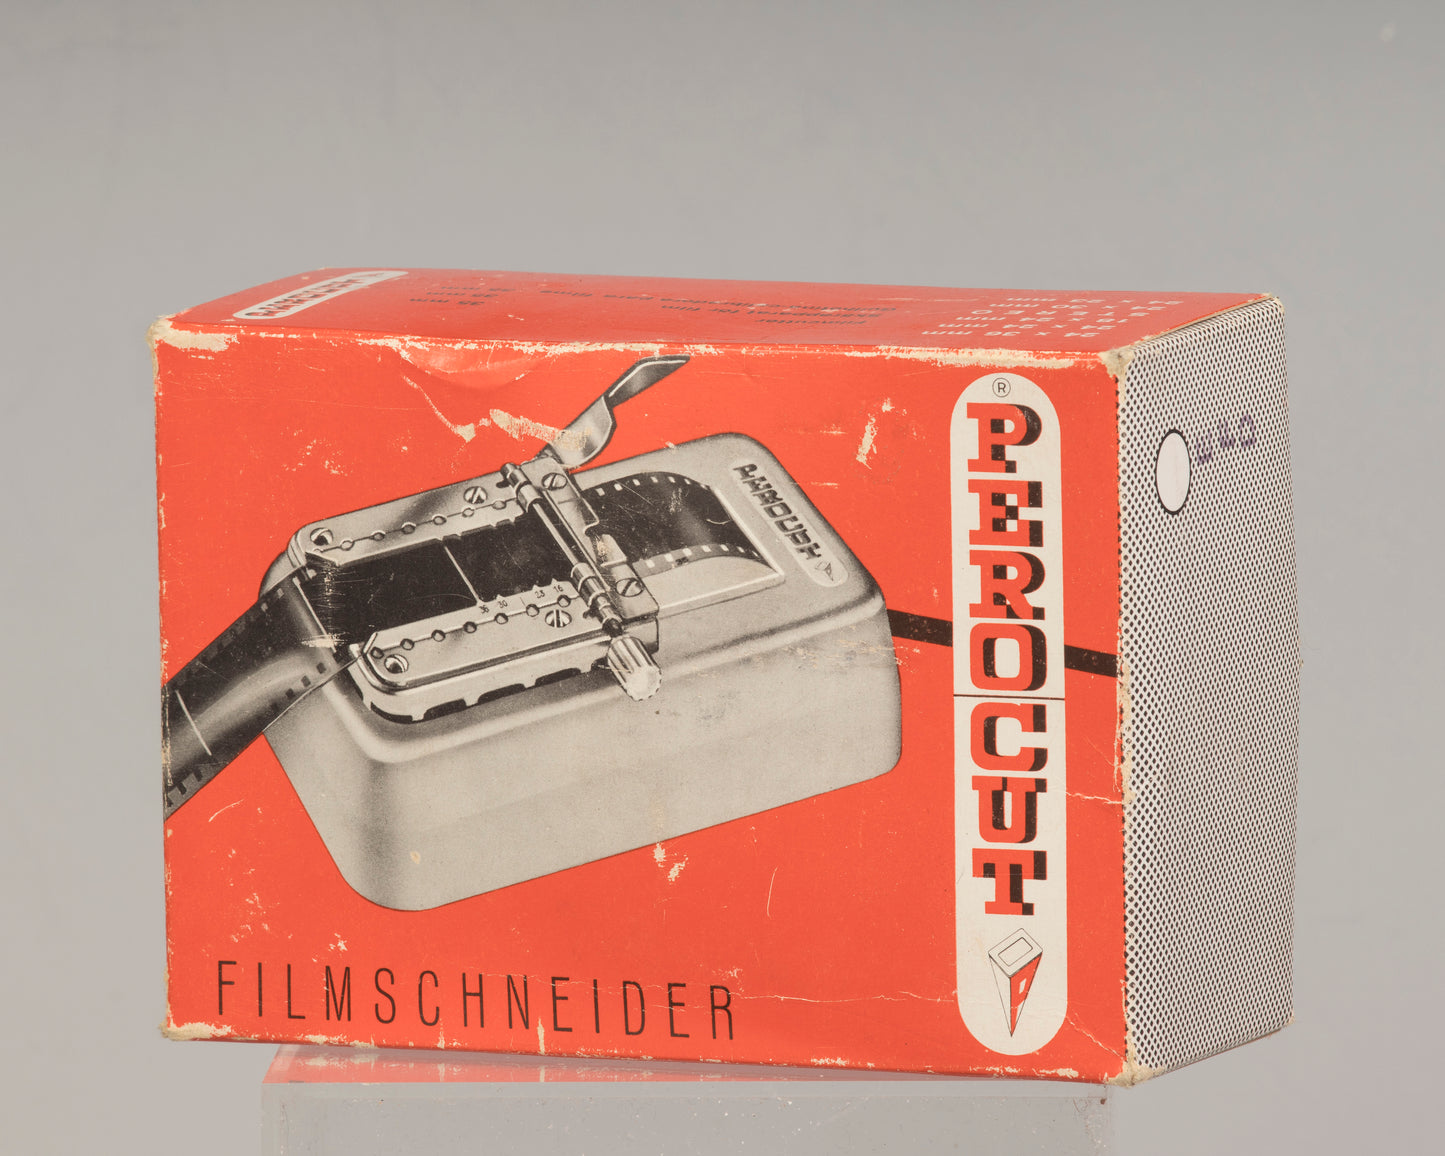 Perocut Filmschneider 35mm film cutter. Made in Switzerland.